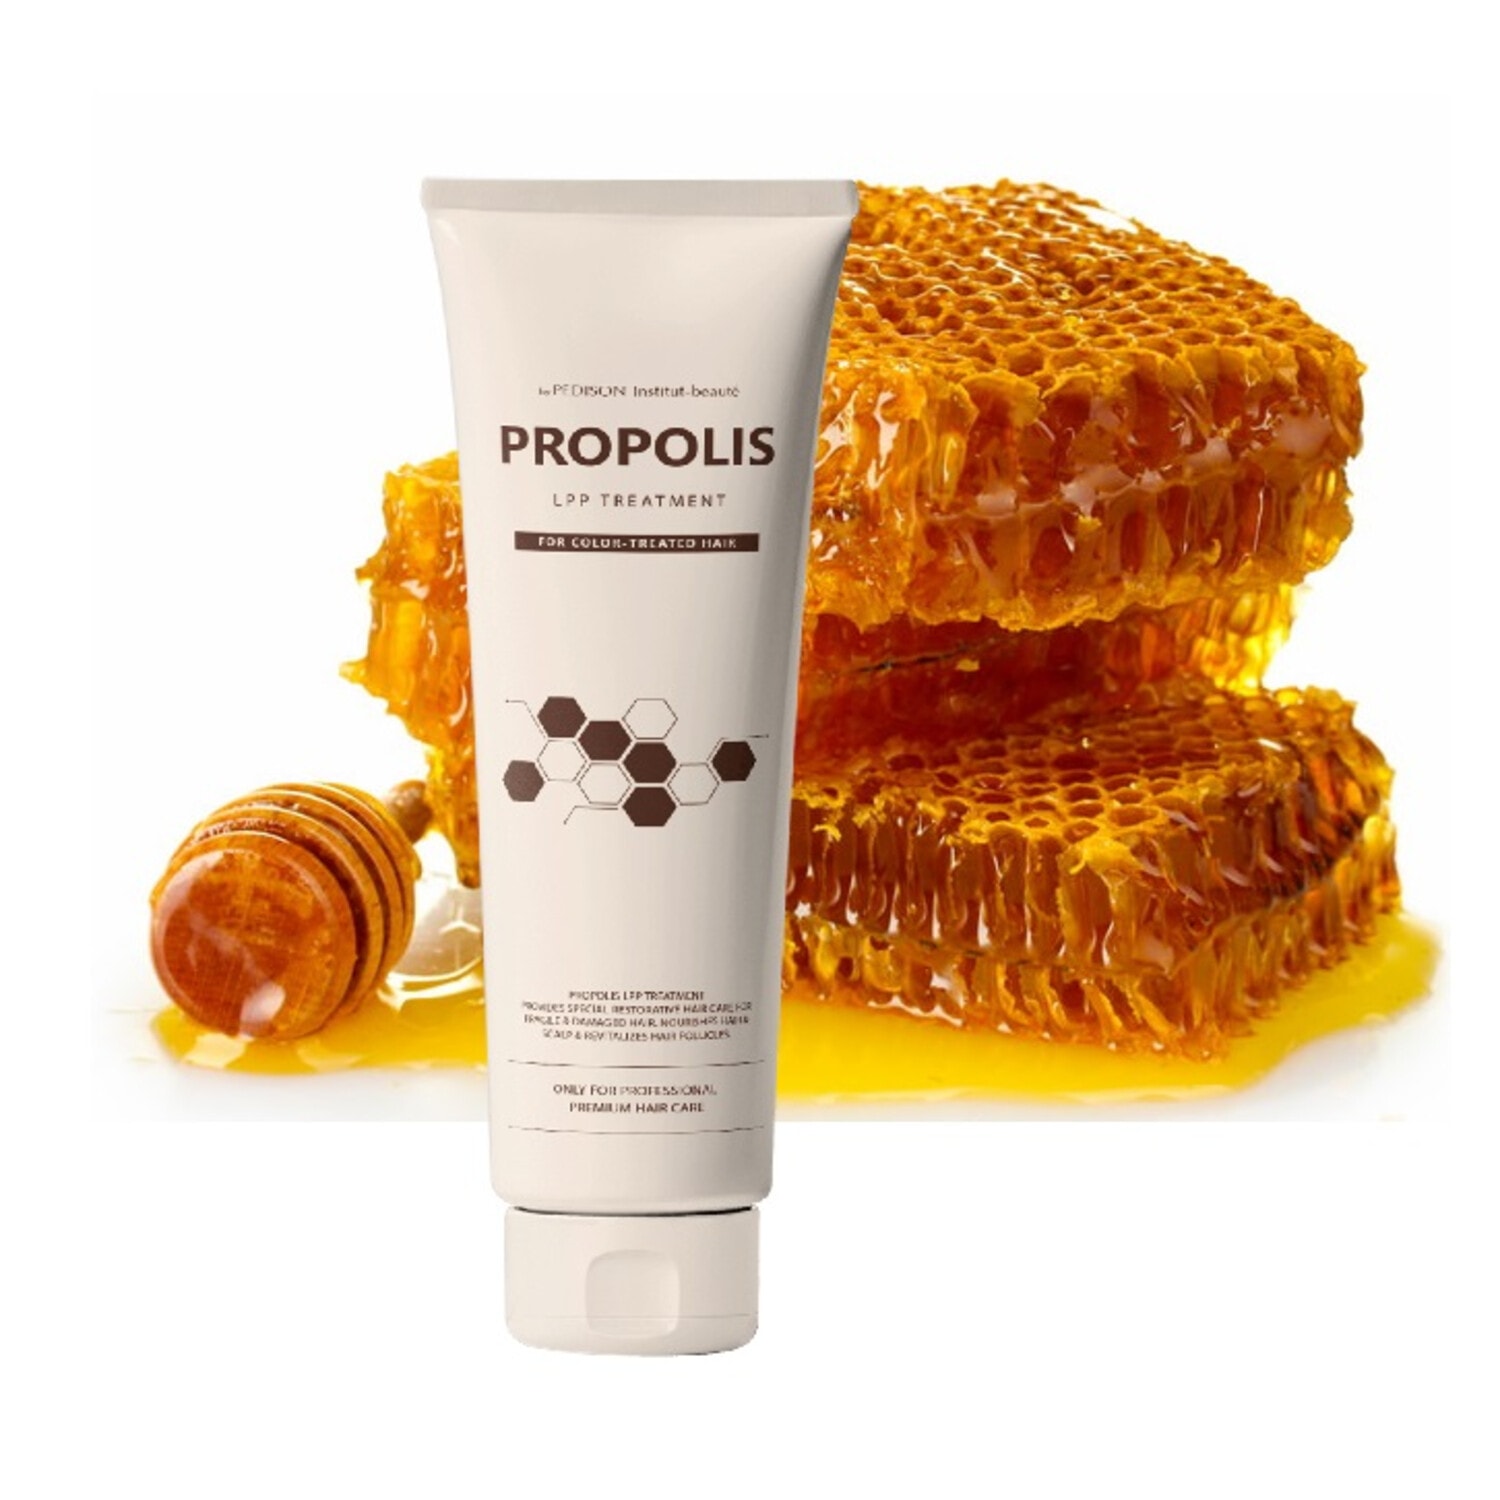 EVAS Pedison Institut-Beaute Propolis LPP Treatment Маска для волос ПРОПОЛИС, 100 мл. / 004808